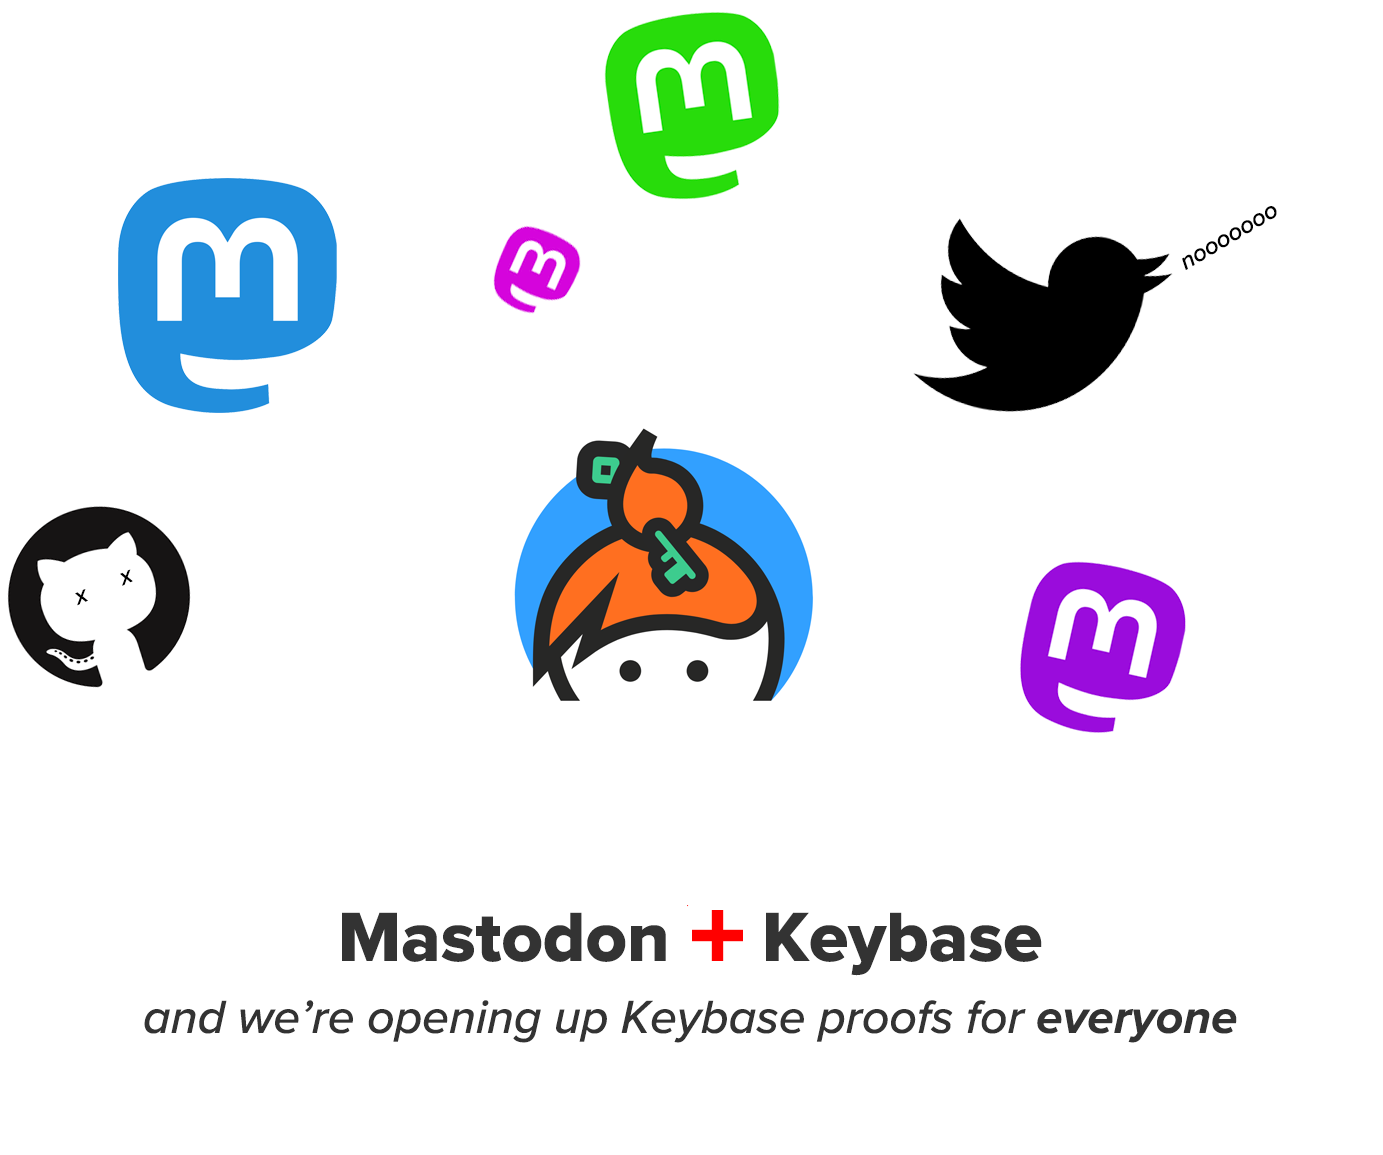 mastodon + keybase = true love 4eva